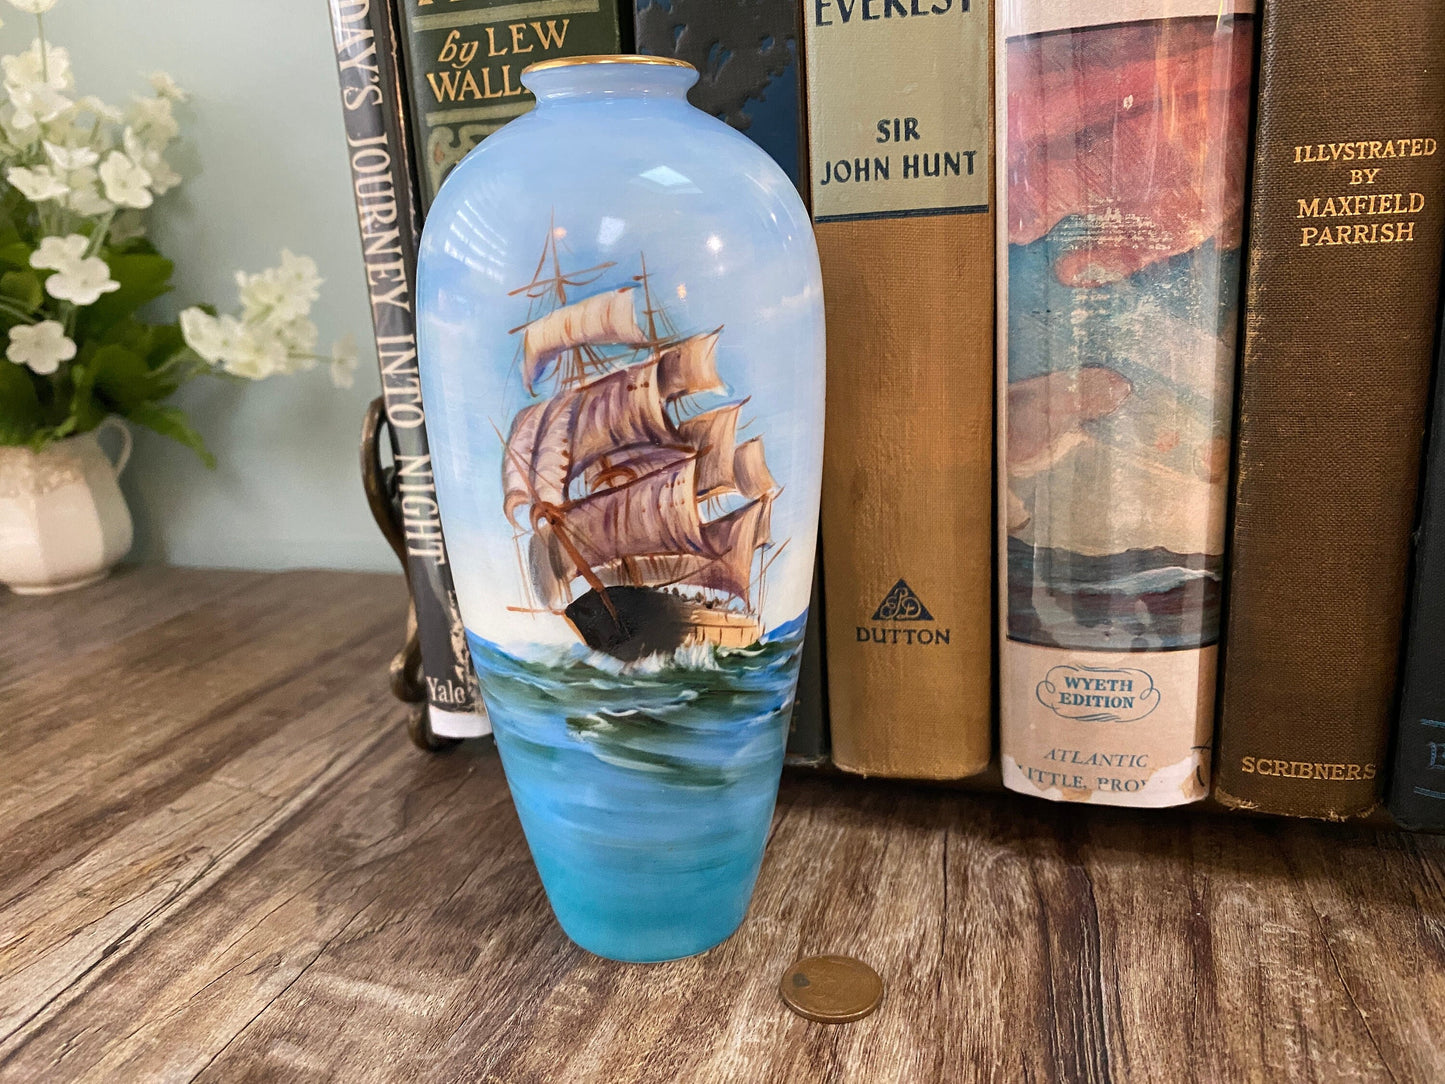 Vintage Notitake Clipper Ship Vase Signed by the Artist